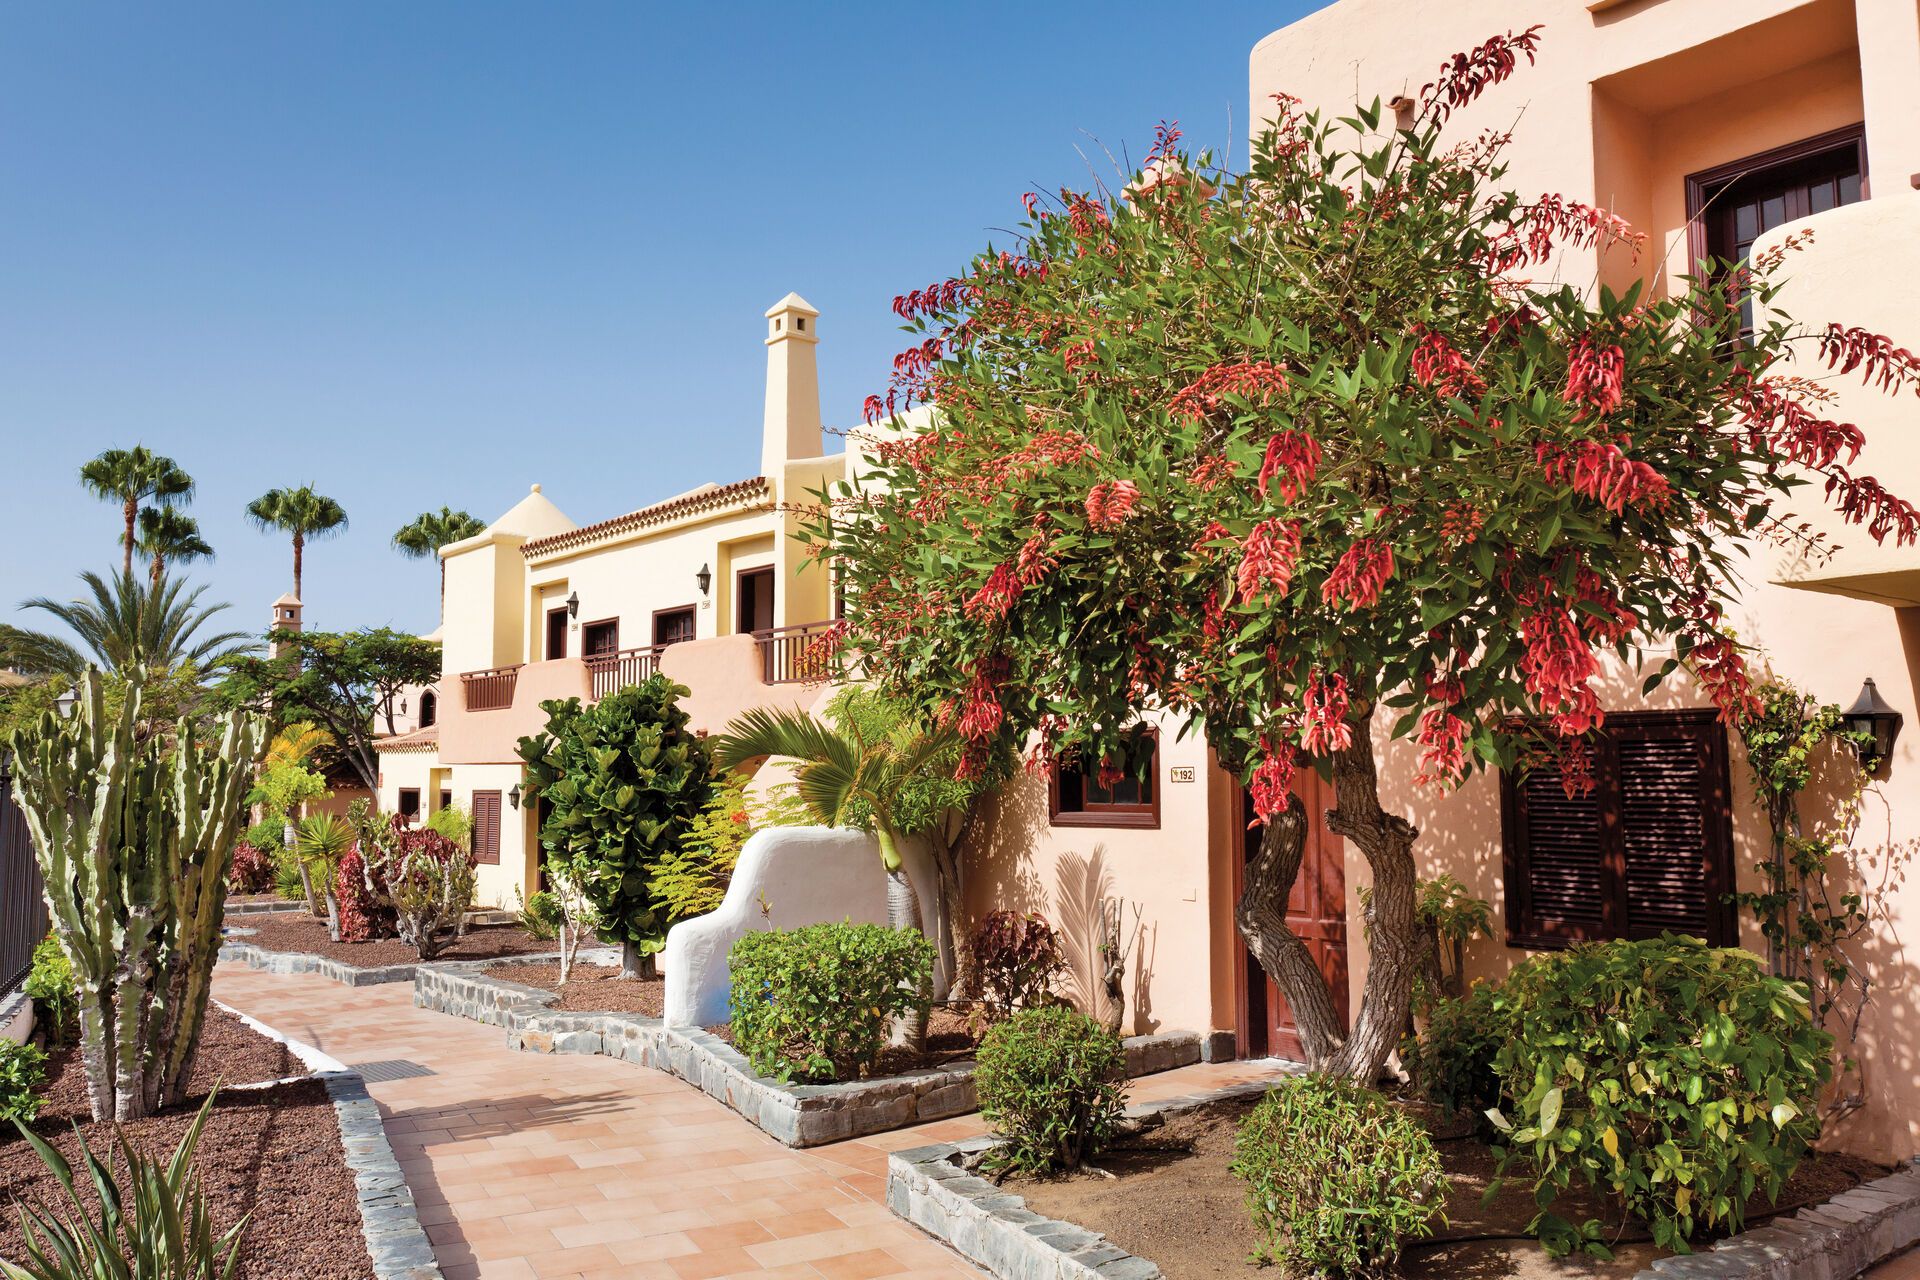 Canaries - Tenerife - Espagne - Hotel Tagoro Family & Fun Costa Adeje 4*